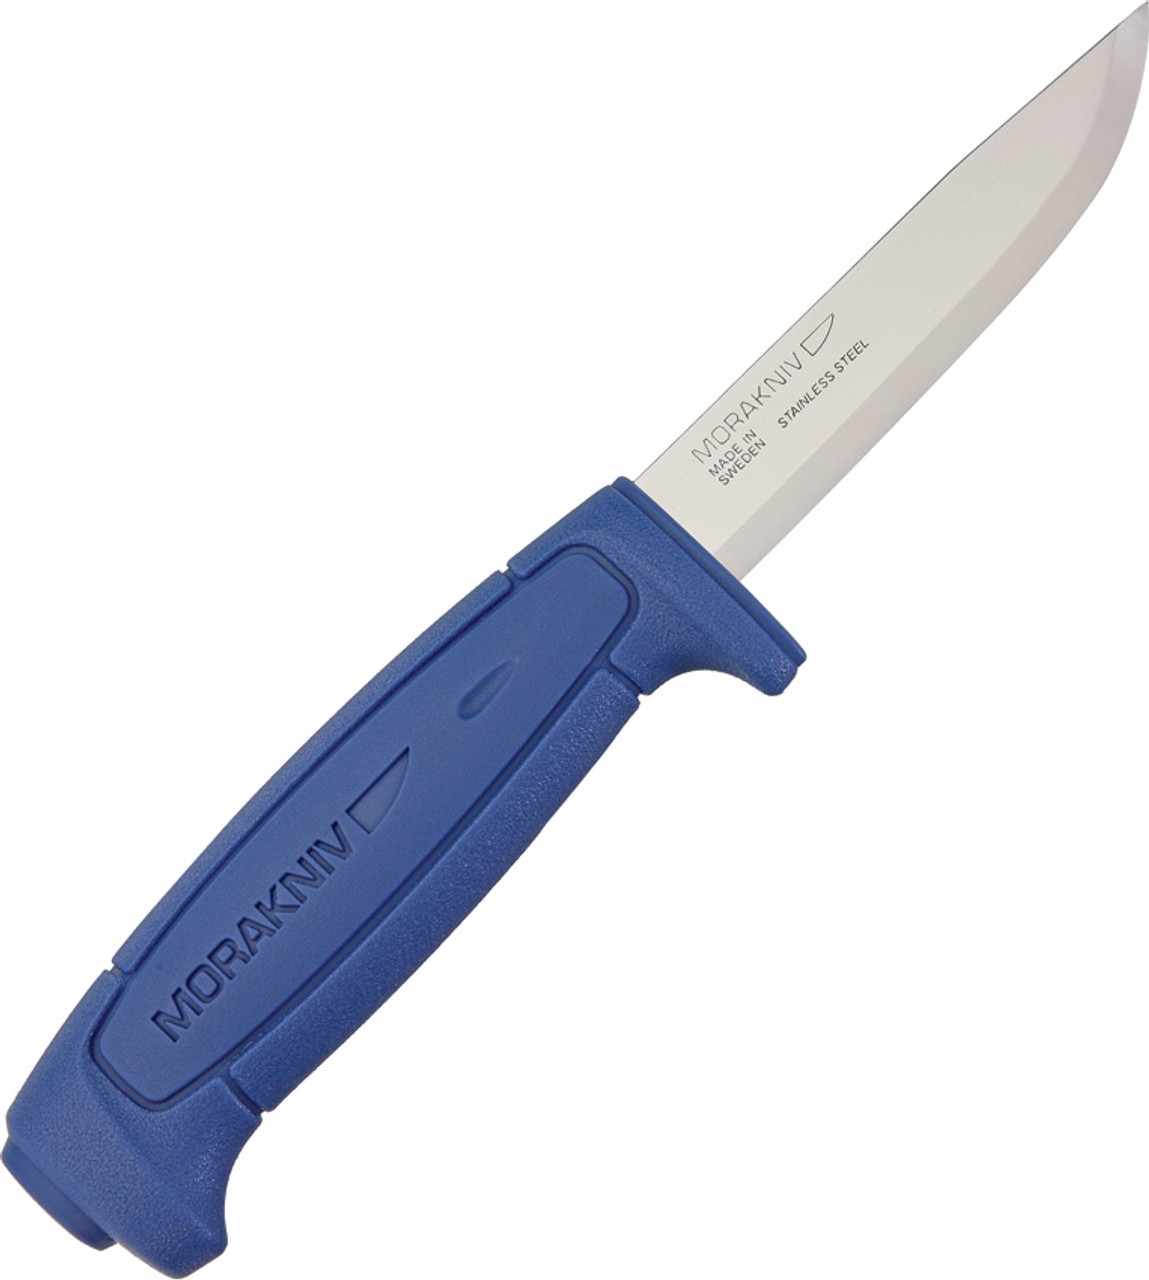 Mora Sweden Morakniv Basic 546 Blue Hunting Survival Knife